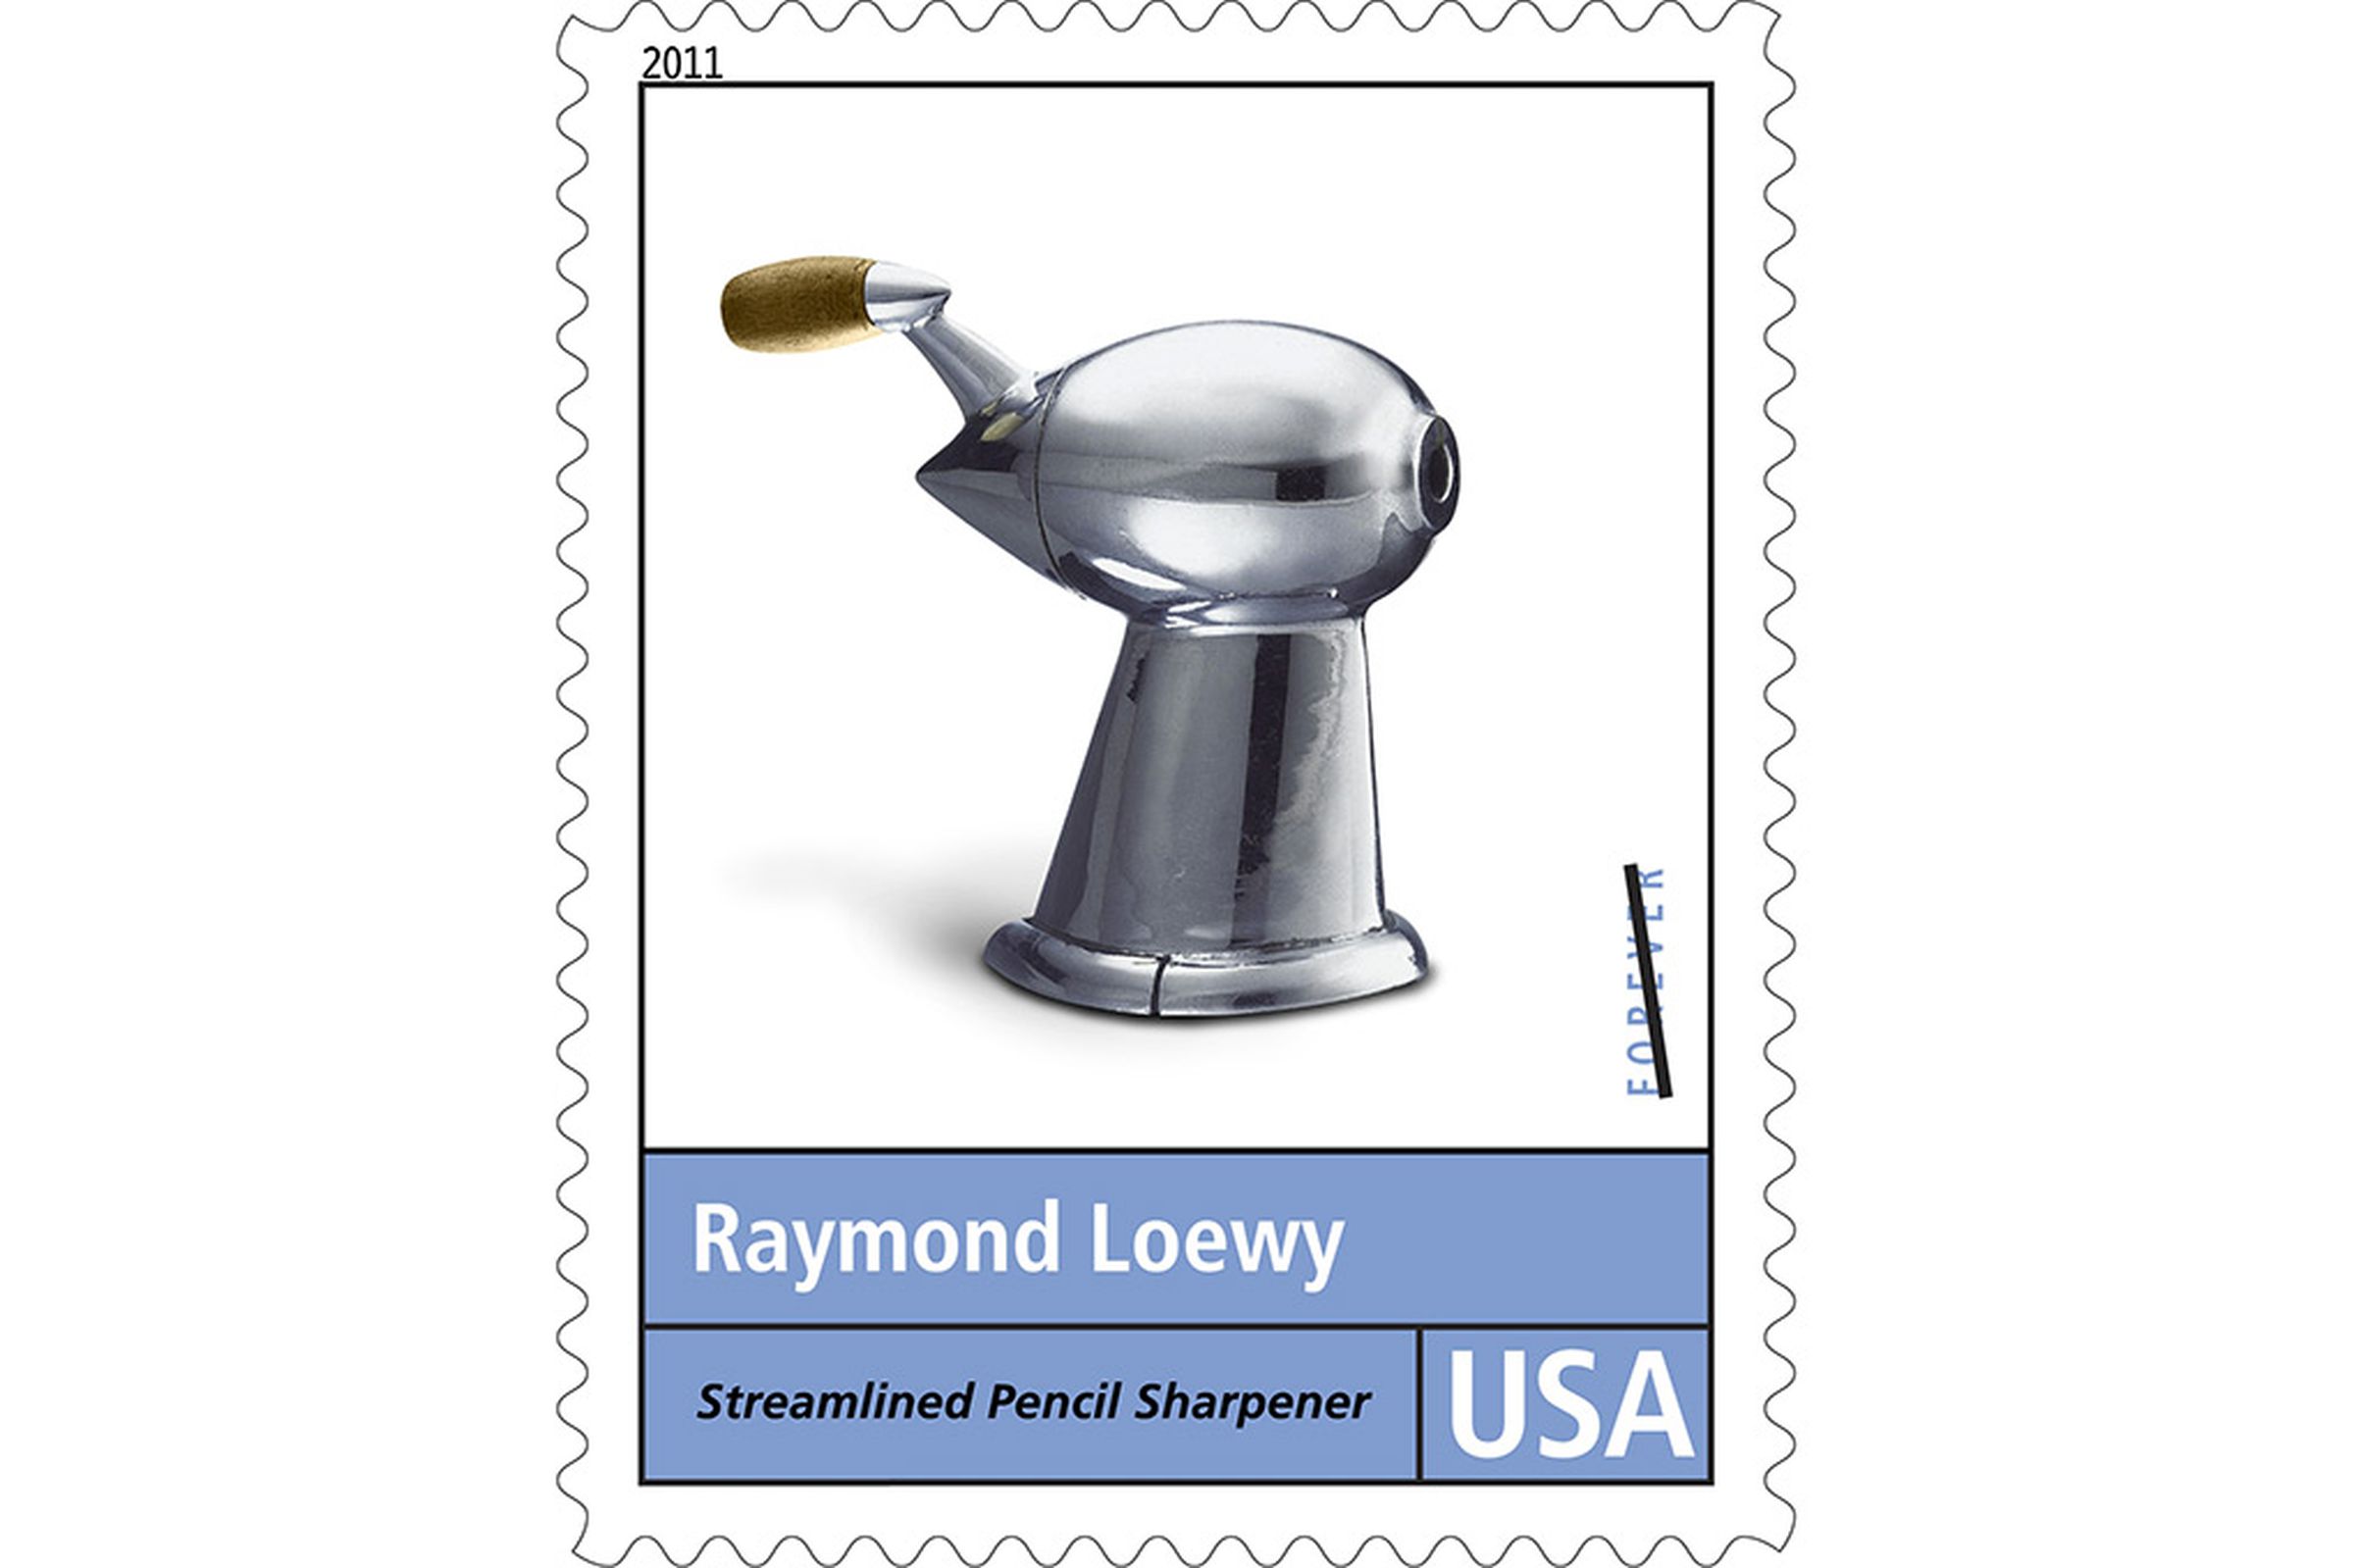 Raymond Loewy's iconic designs